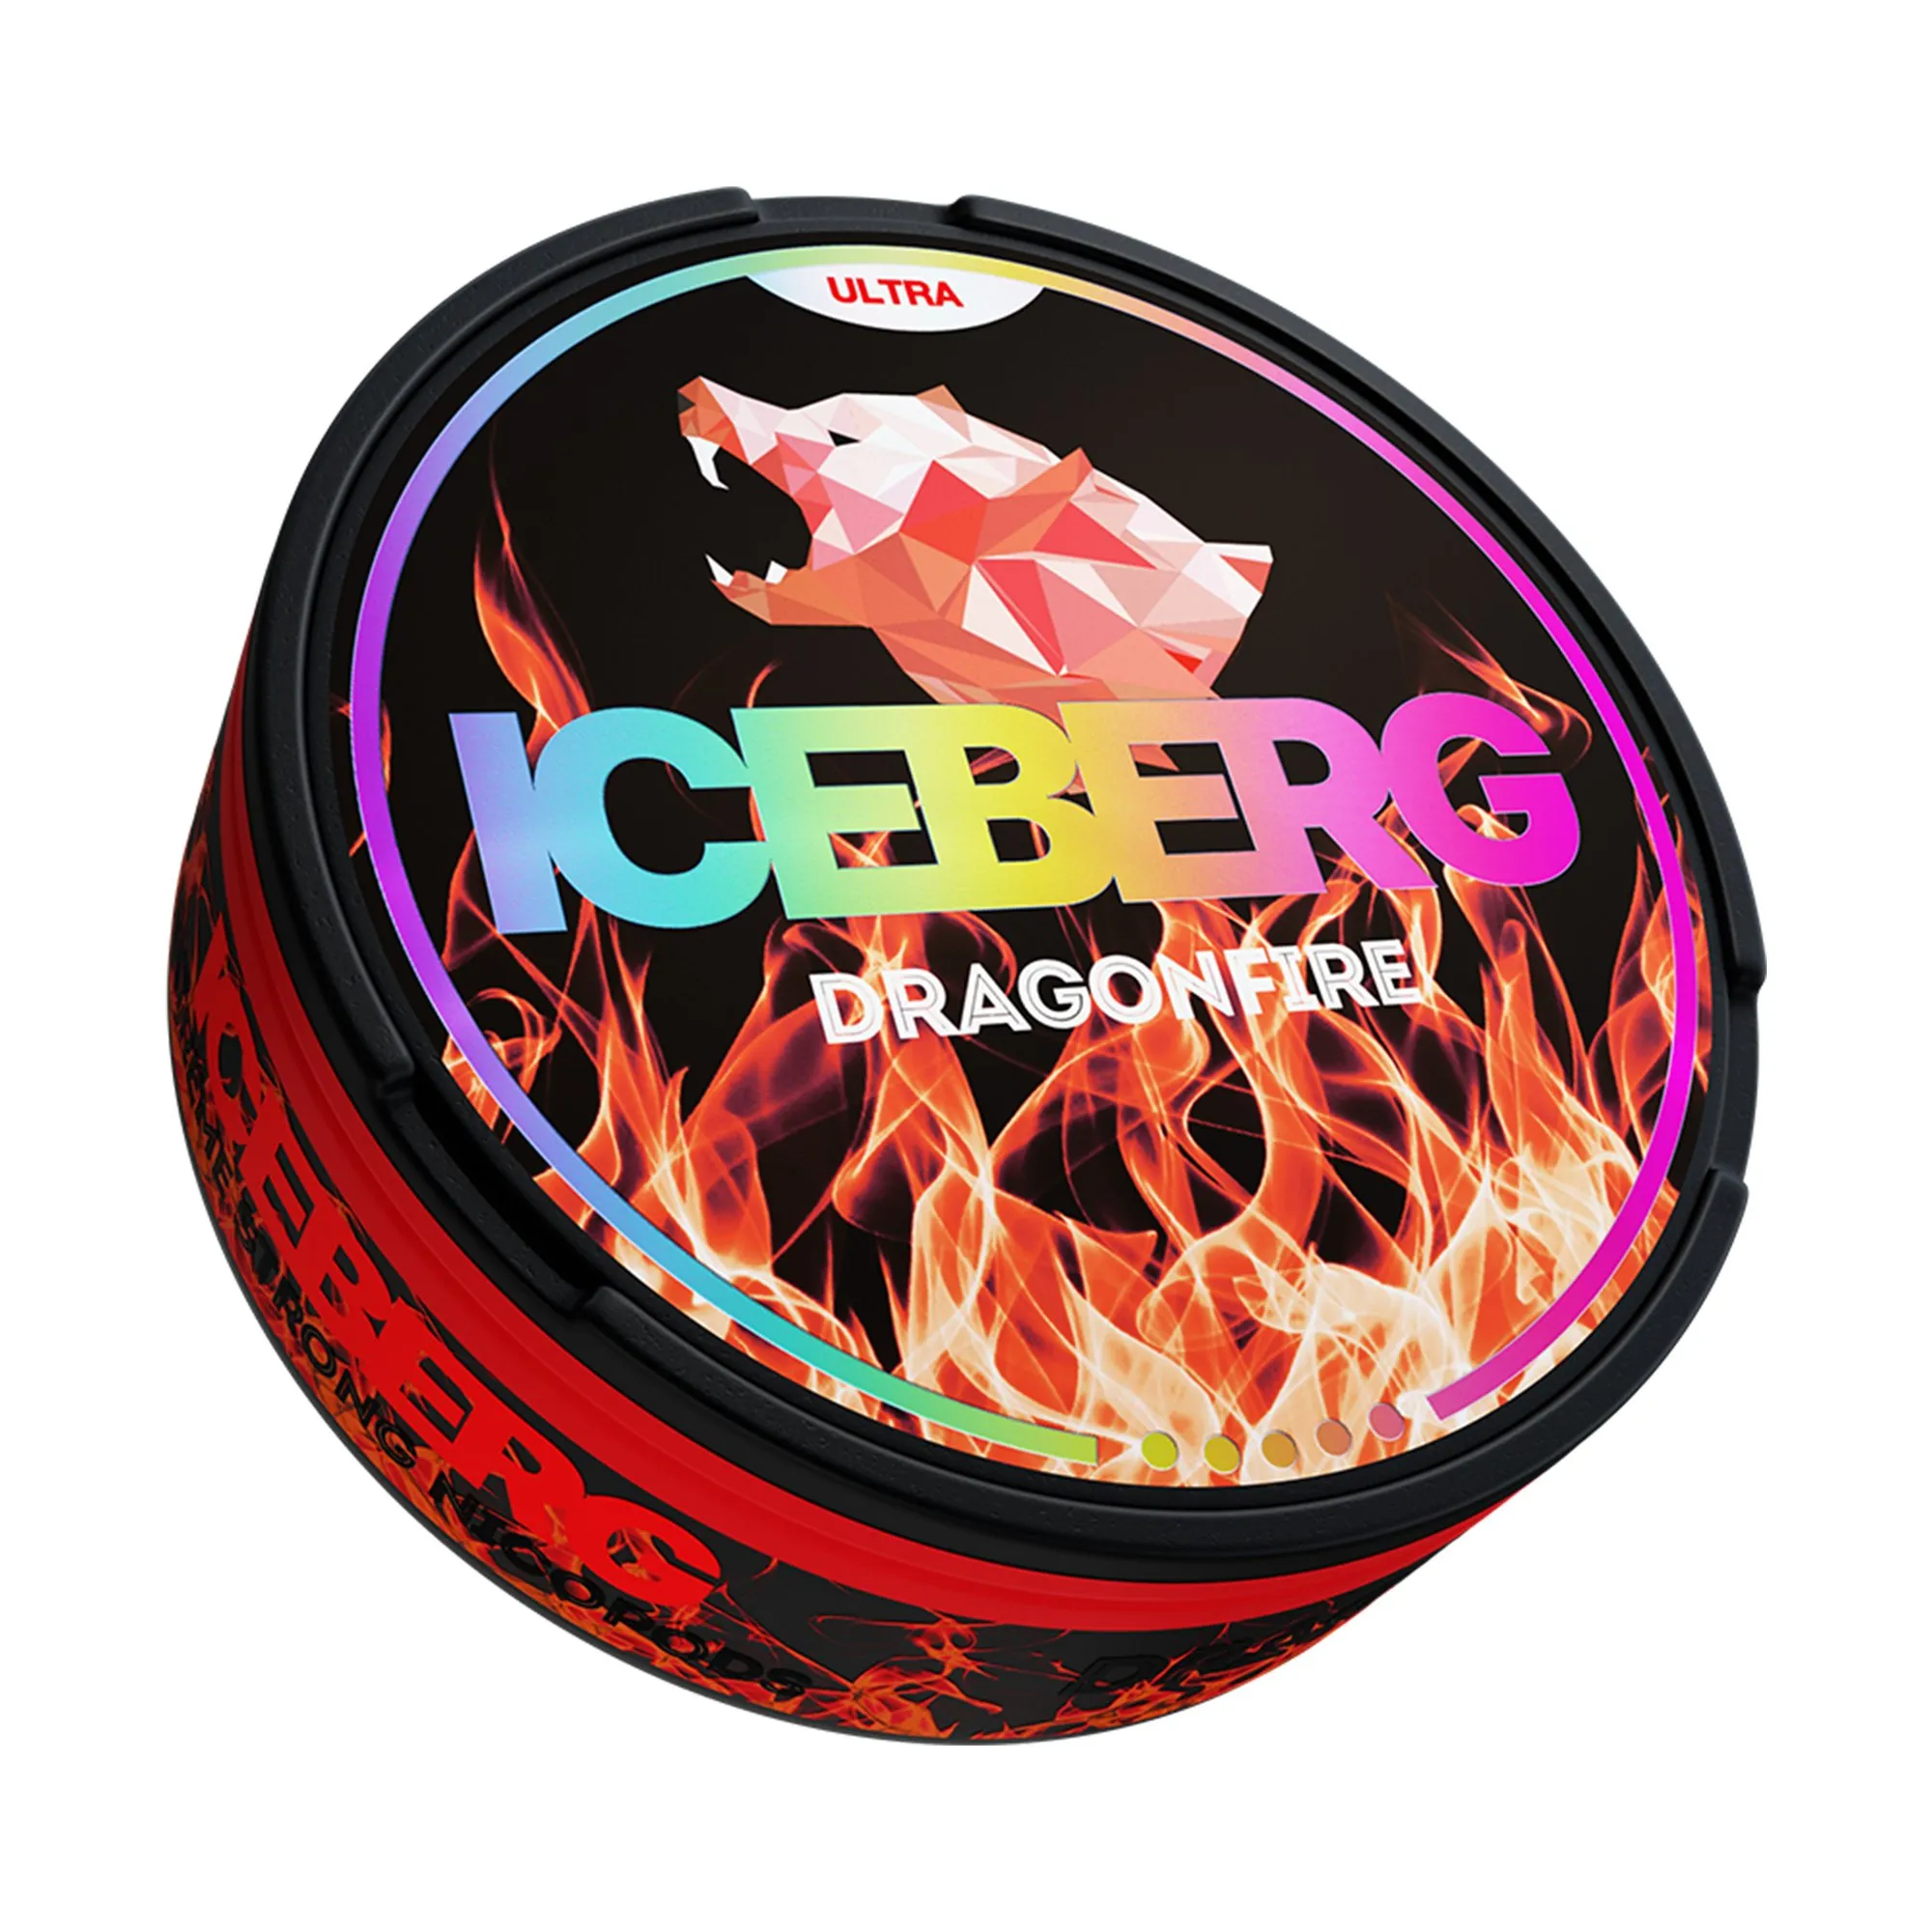 Iceberg Dragon Fire